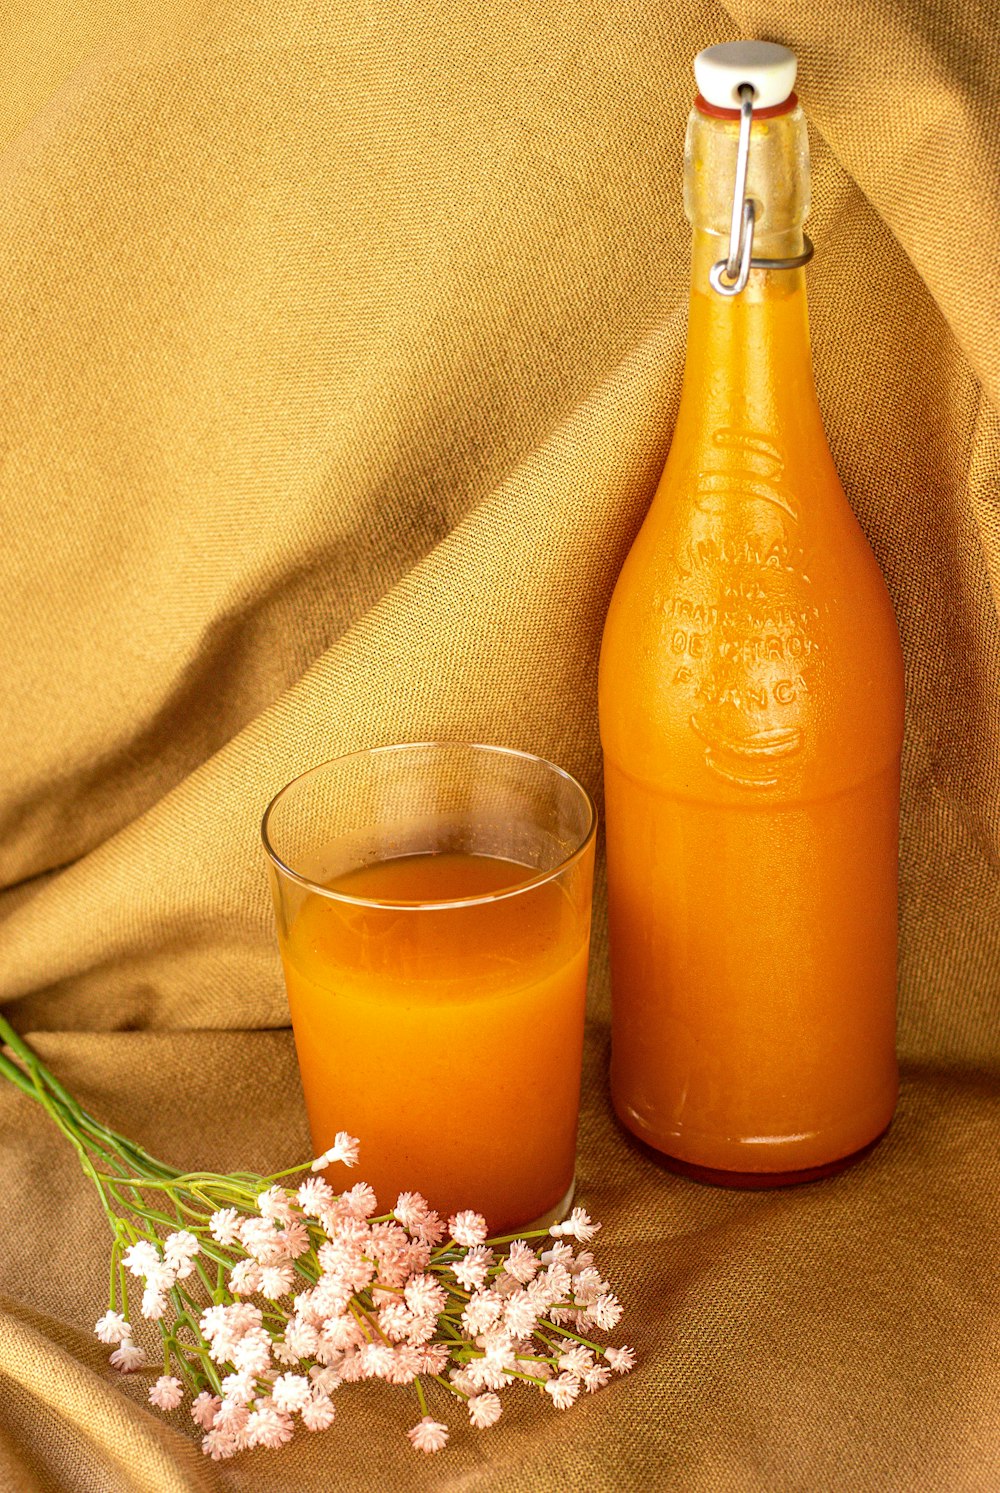 orange liquid in clear drinking glass